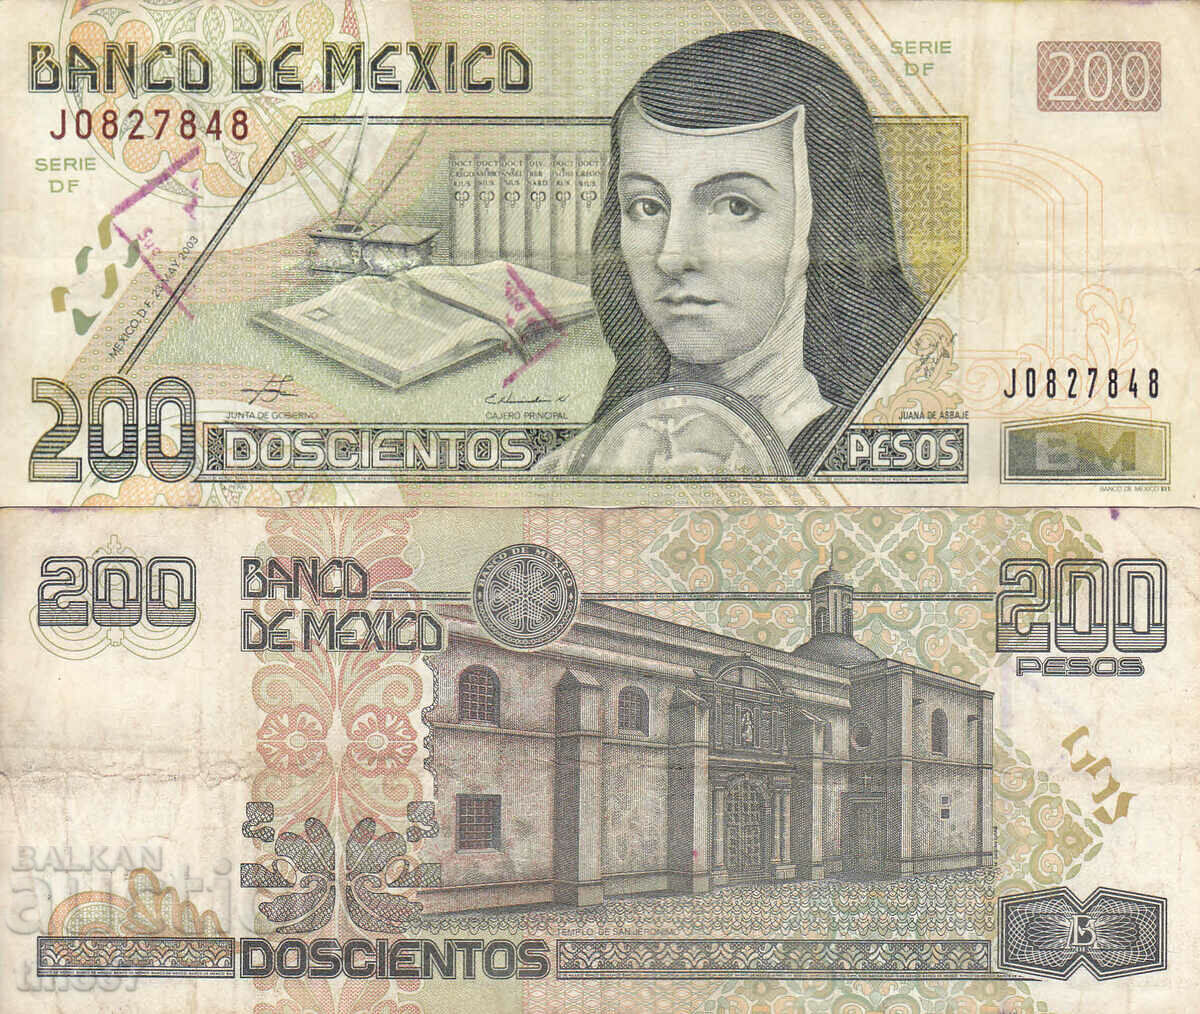 tino37- MEXICO - 200 PESOS -2003 - F+